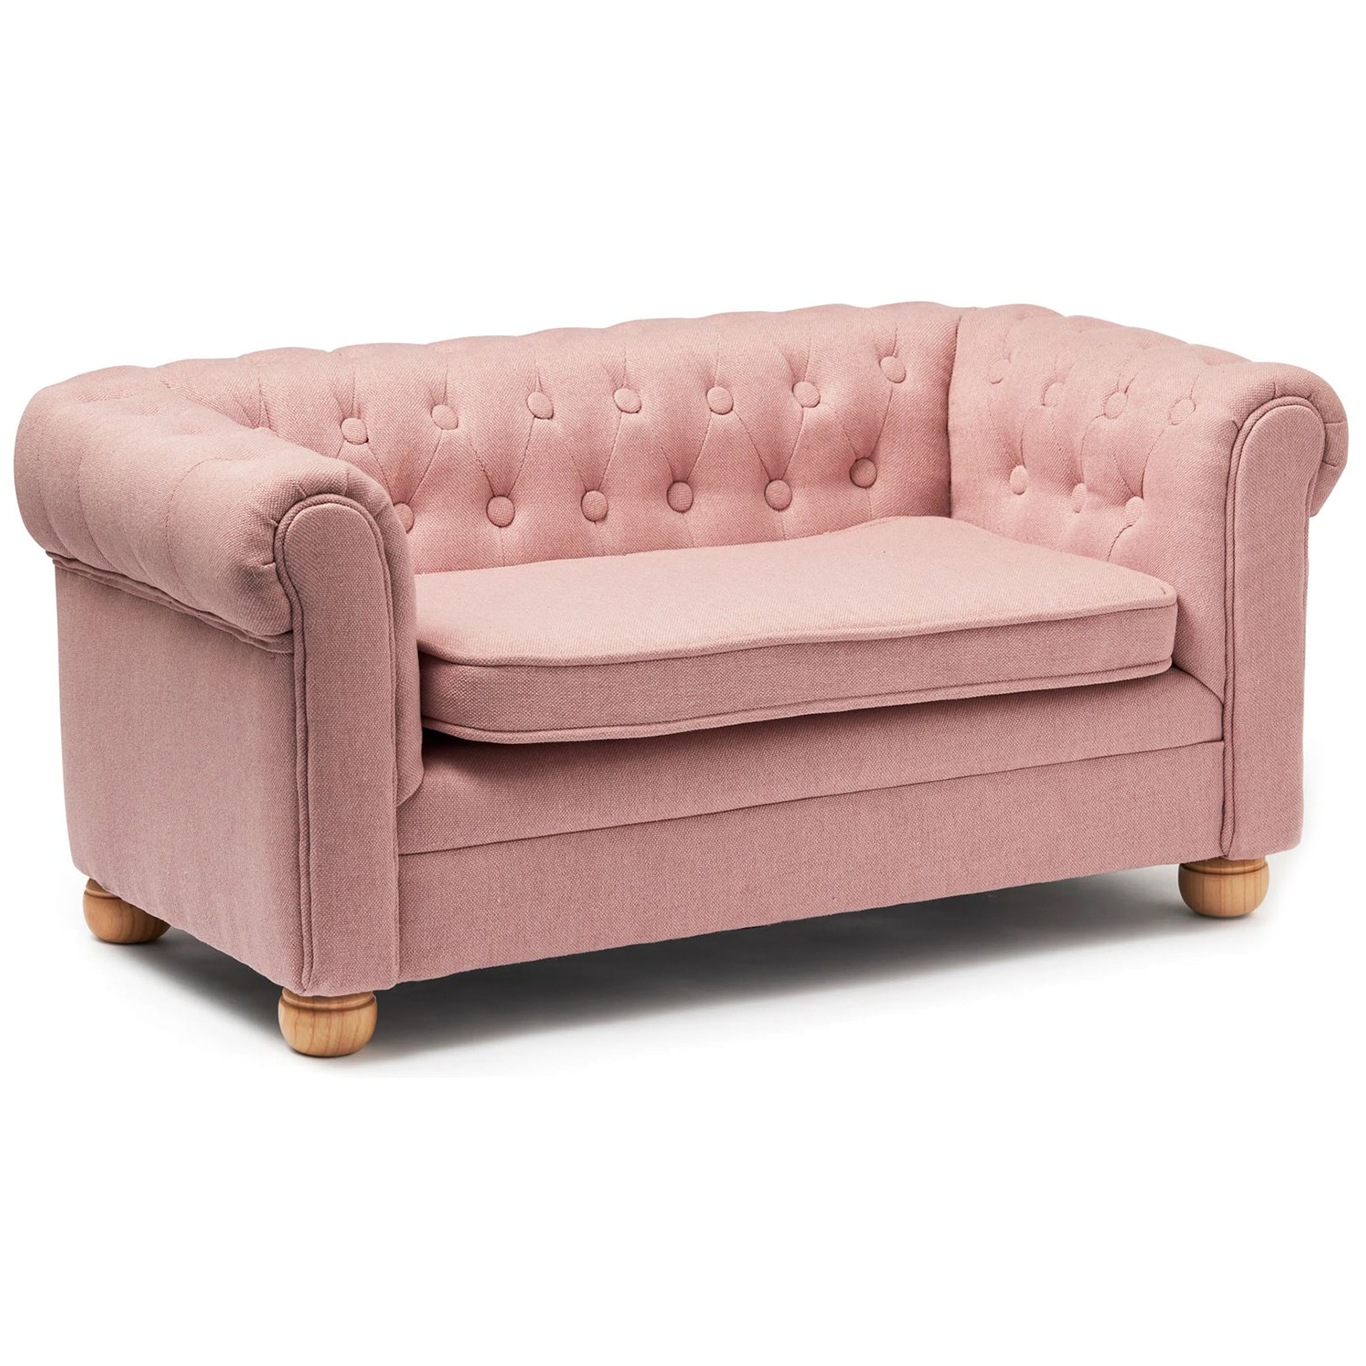 Chesterfield Children'S Sofa, Pink